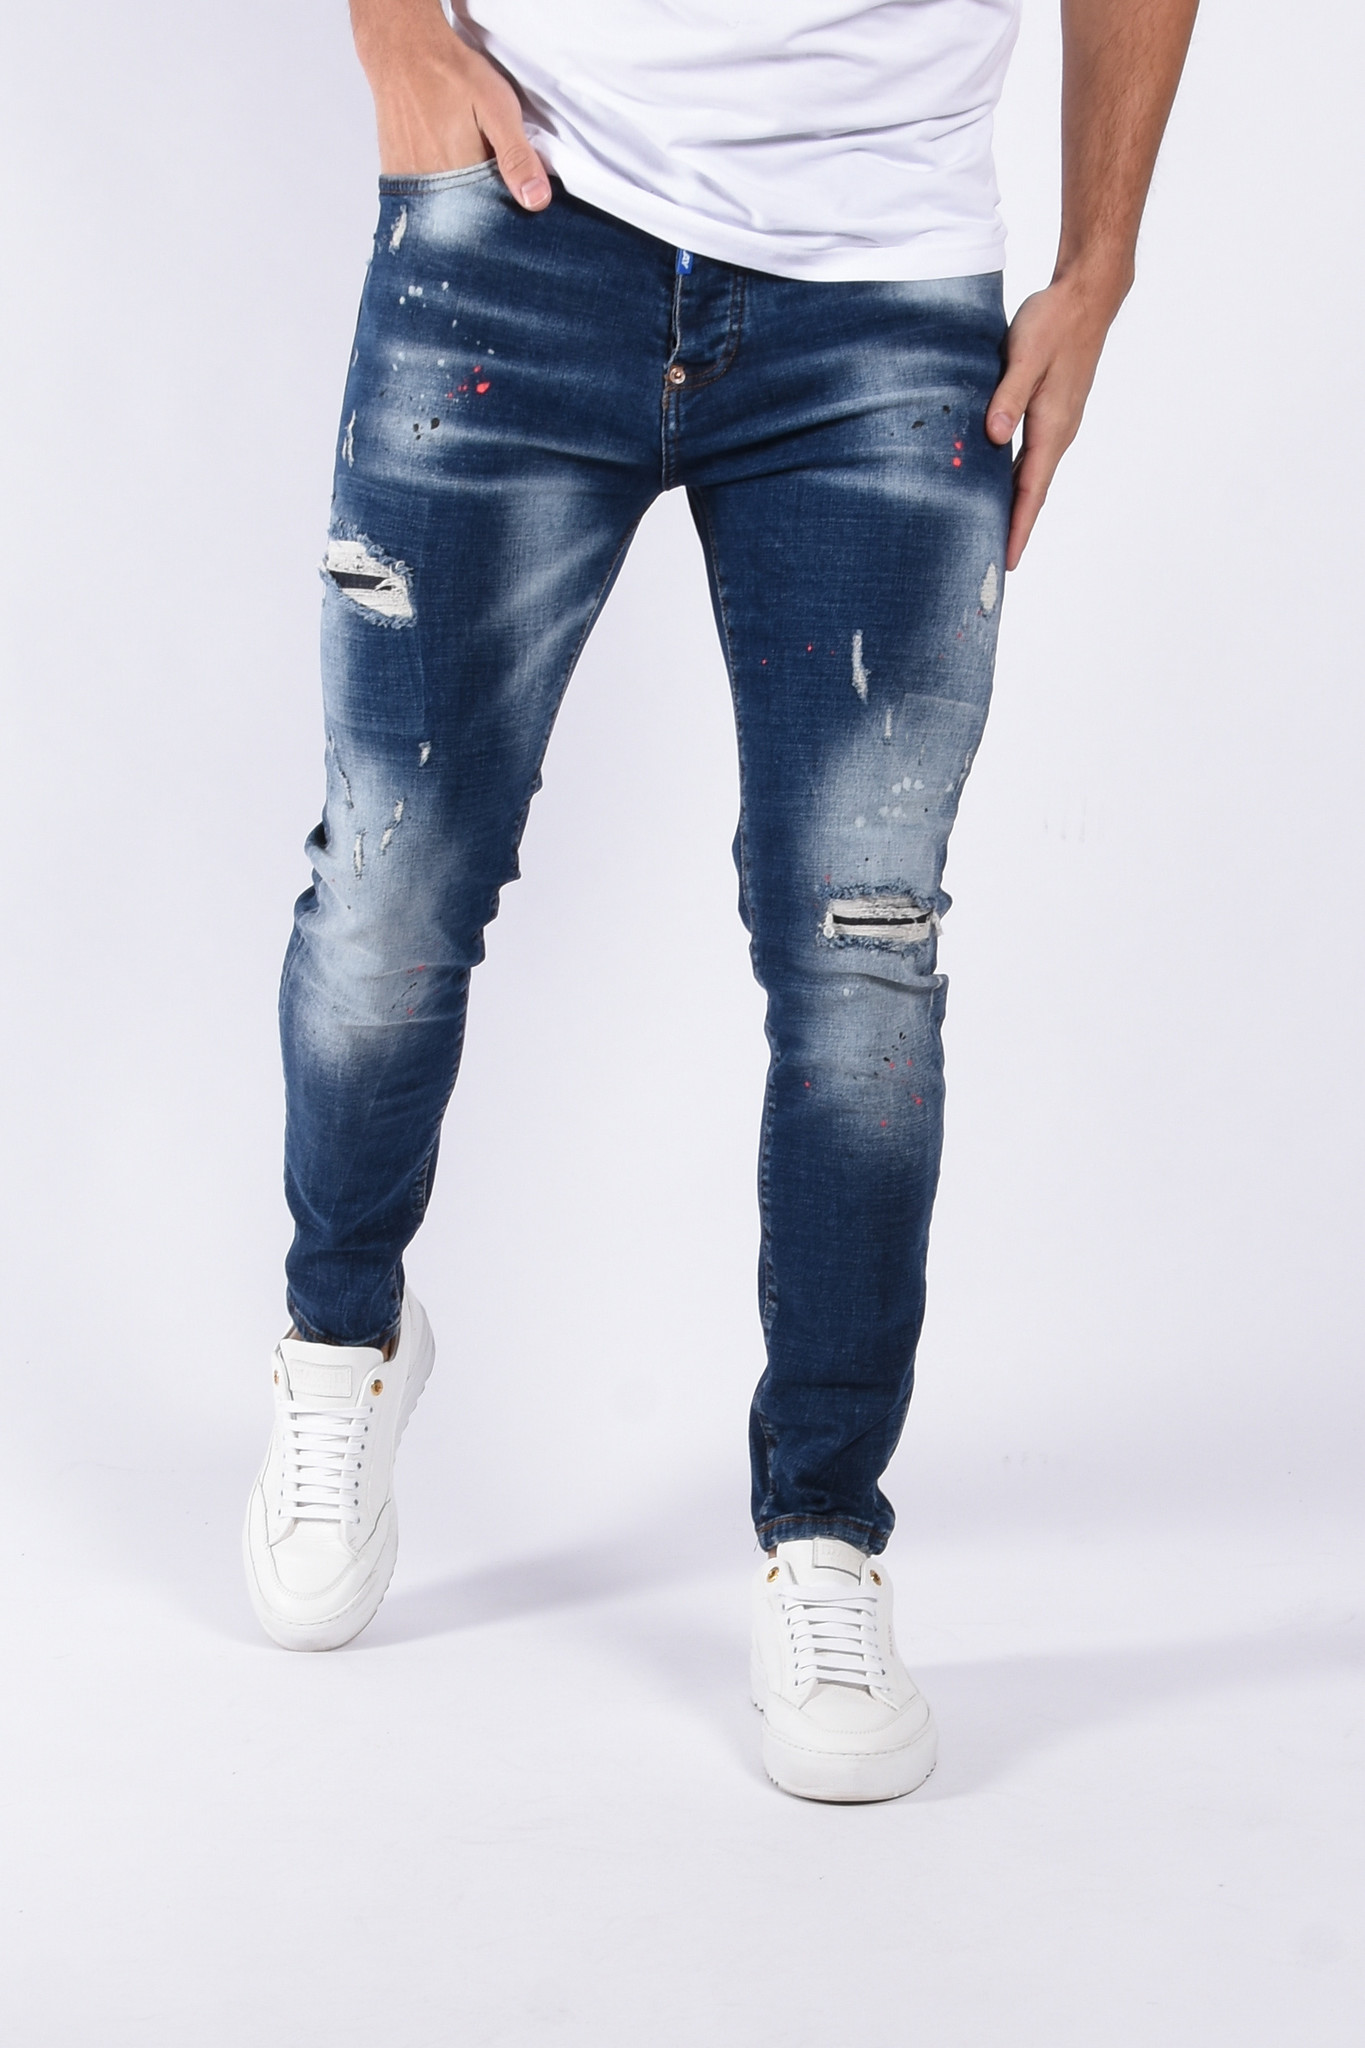 Geaccepteerd zwaartekracht Adolescent Slim Fit Stretch Jeans “Lloyd” Blue Washed / Splashed - Yugo Menswear  Herenmode Winkel Heerlen en Online Webshop